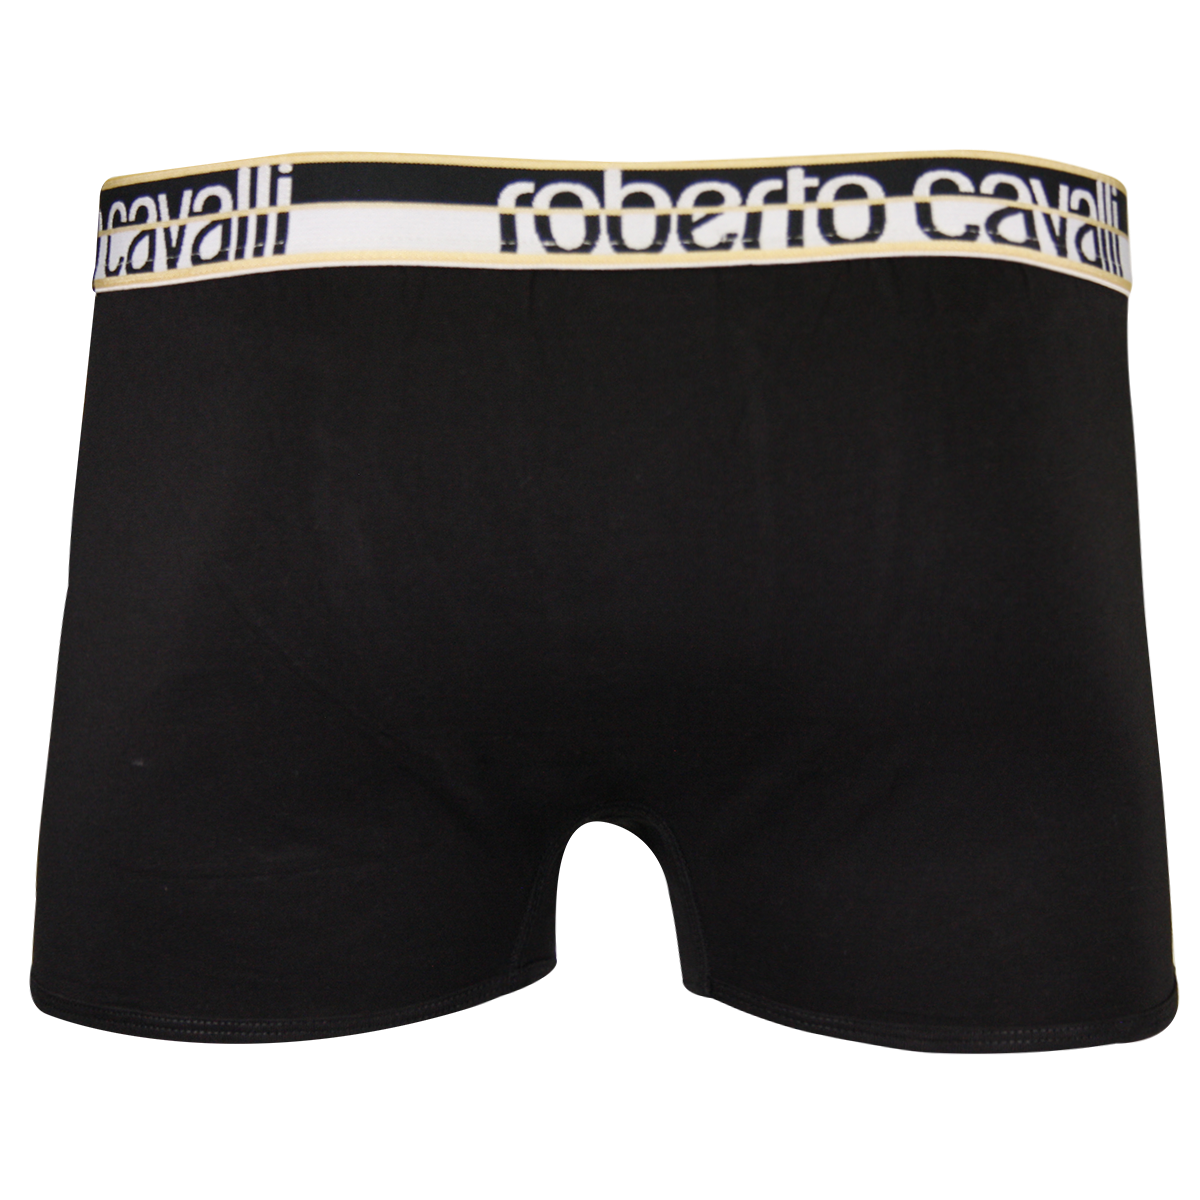 Roberto Cavalli Men's Single Pack Black Stretch Boxer Briefs